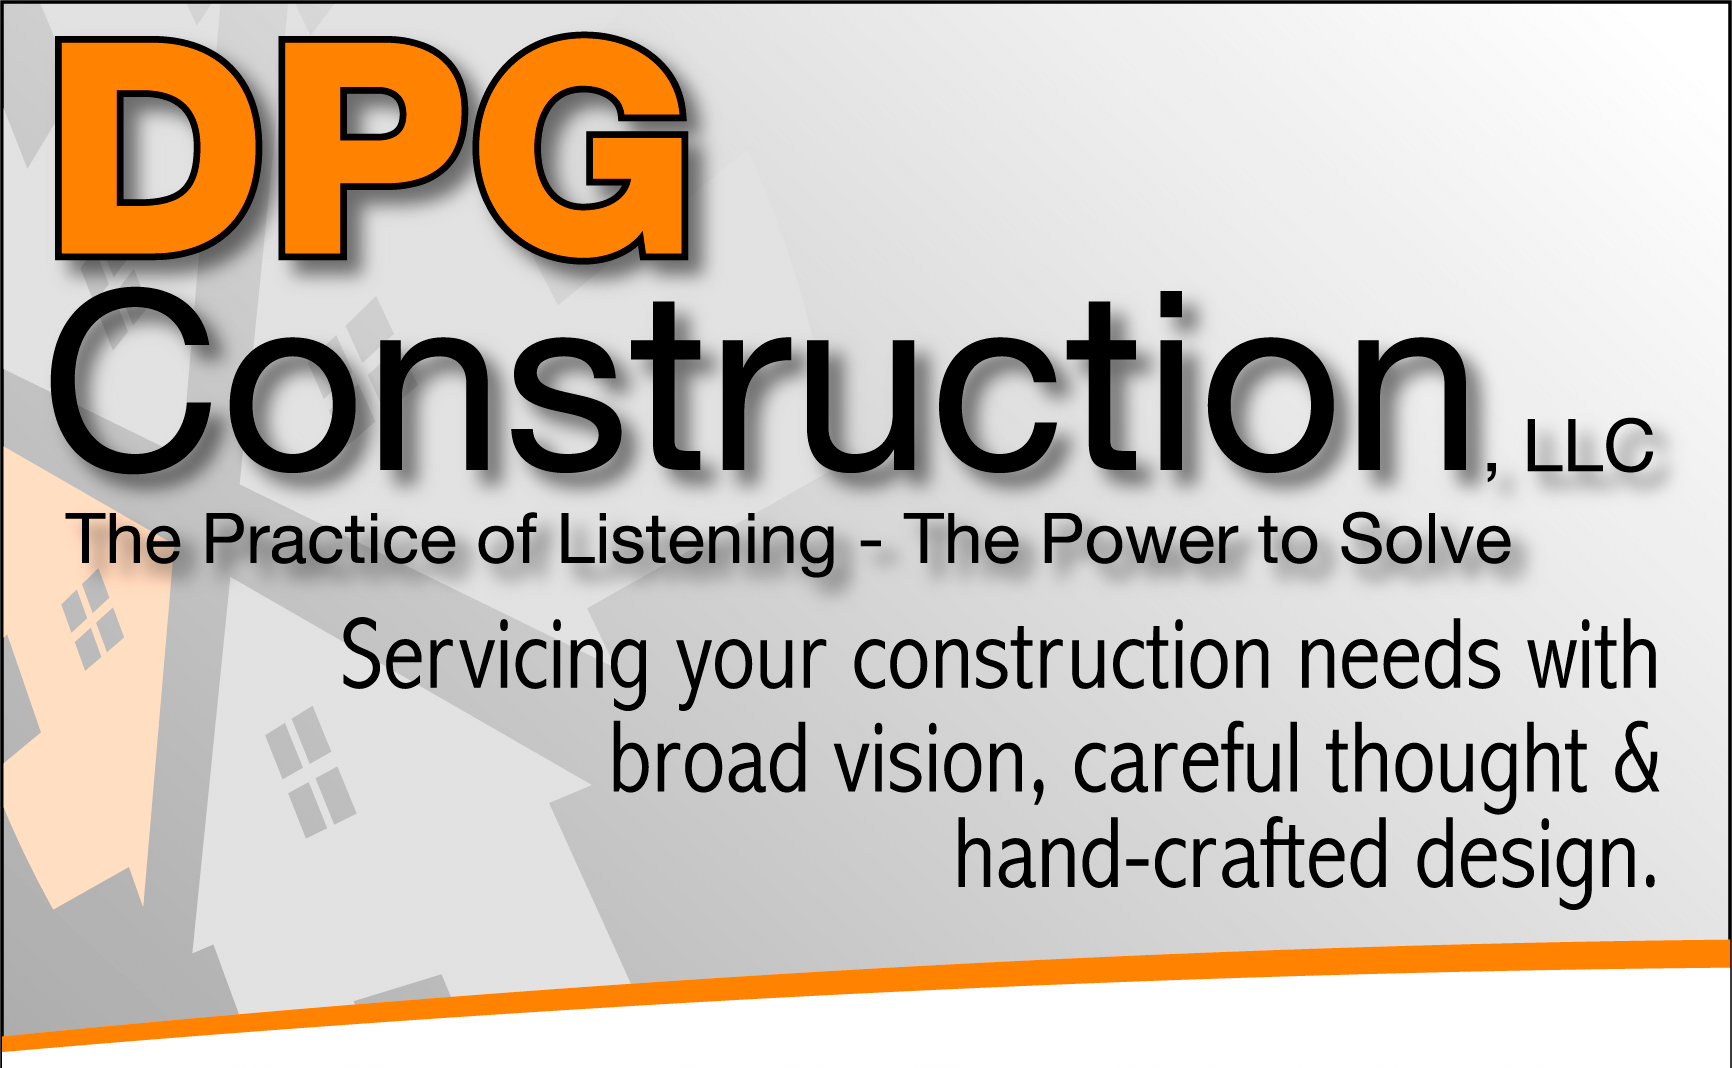 DPG Construction, LLC